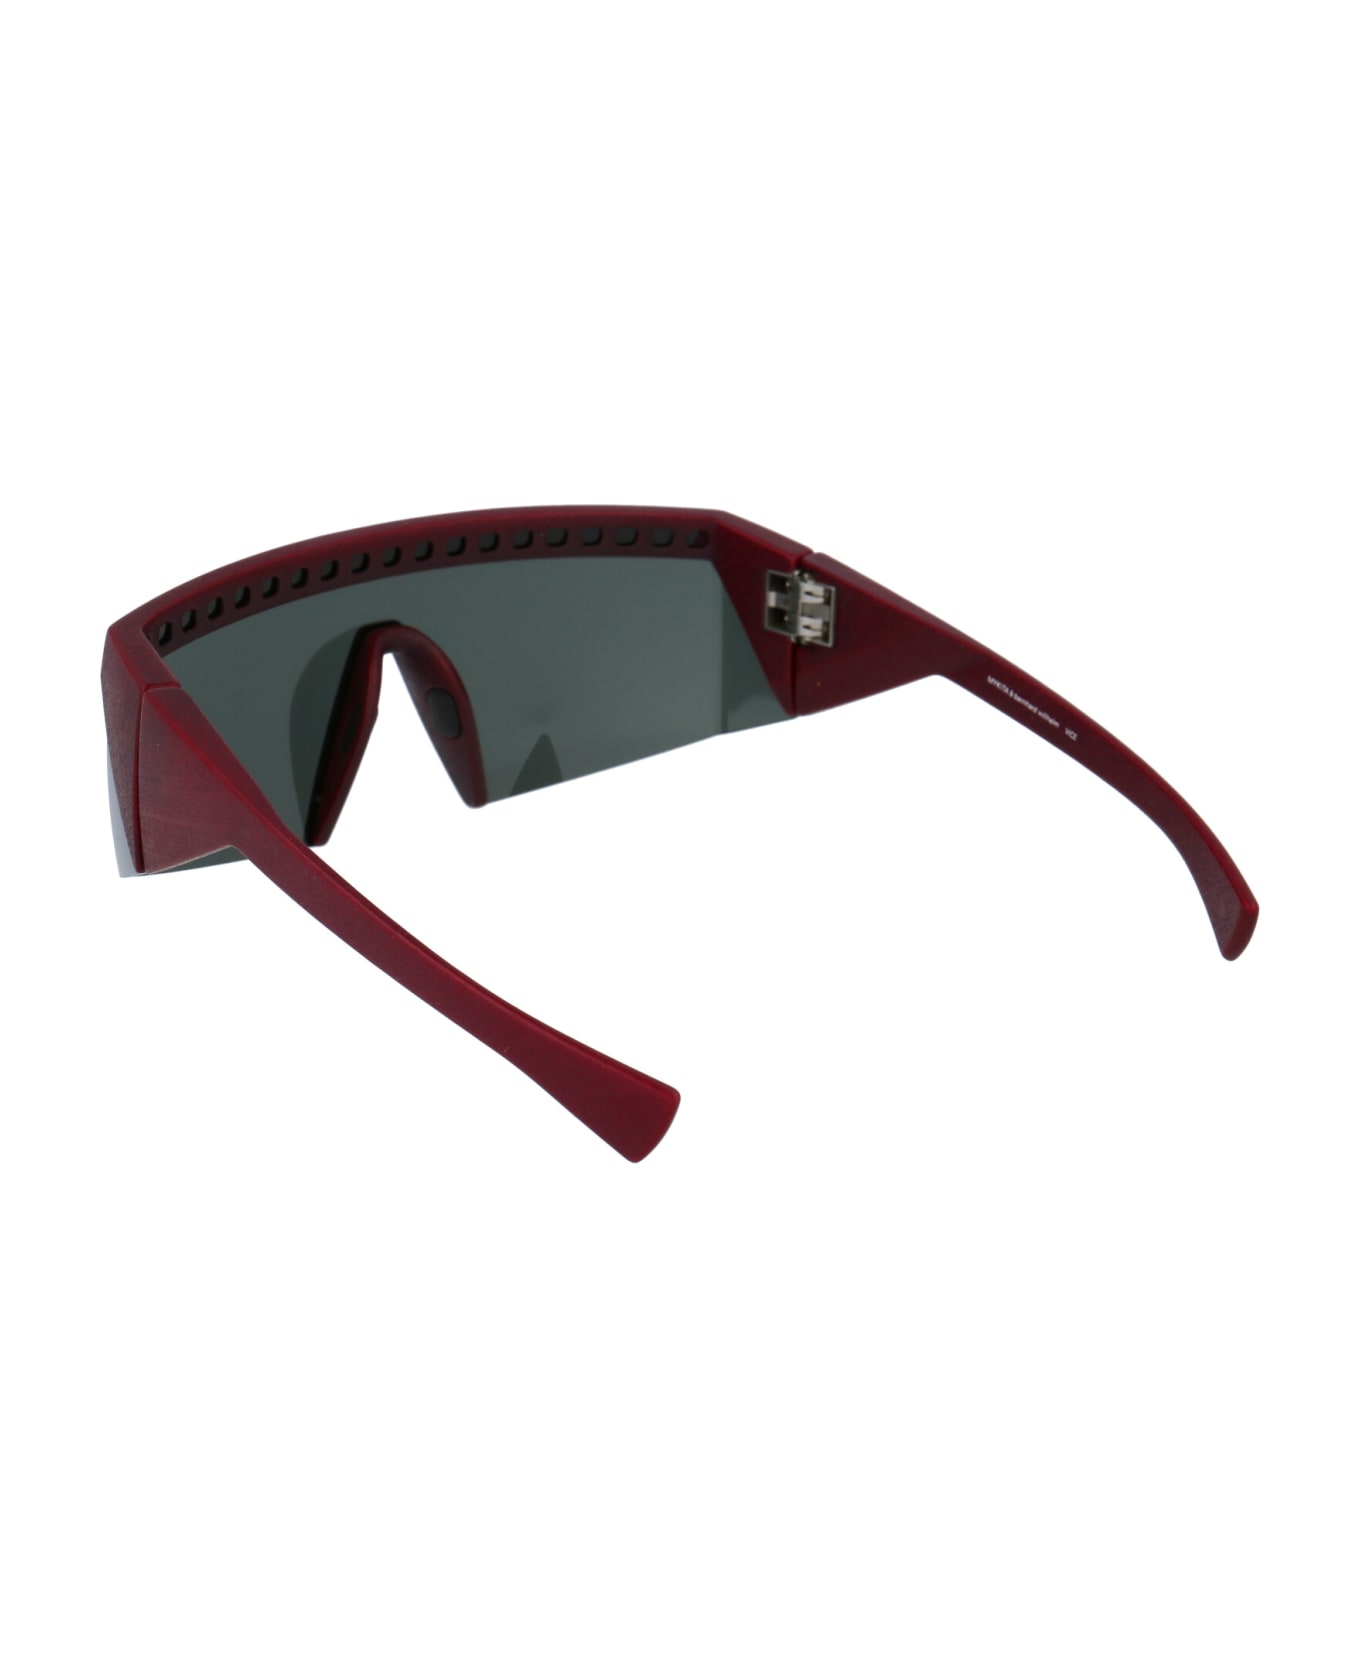 Mykita Vice Sunglasses - 324 MD24 New Aubergine Lateral Silver Flash